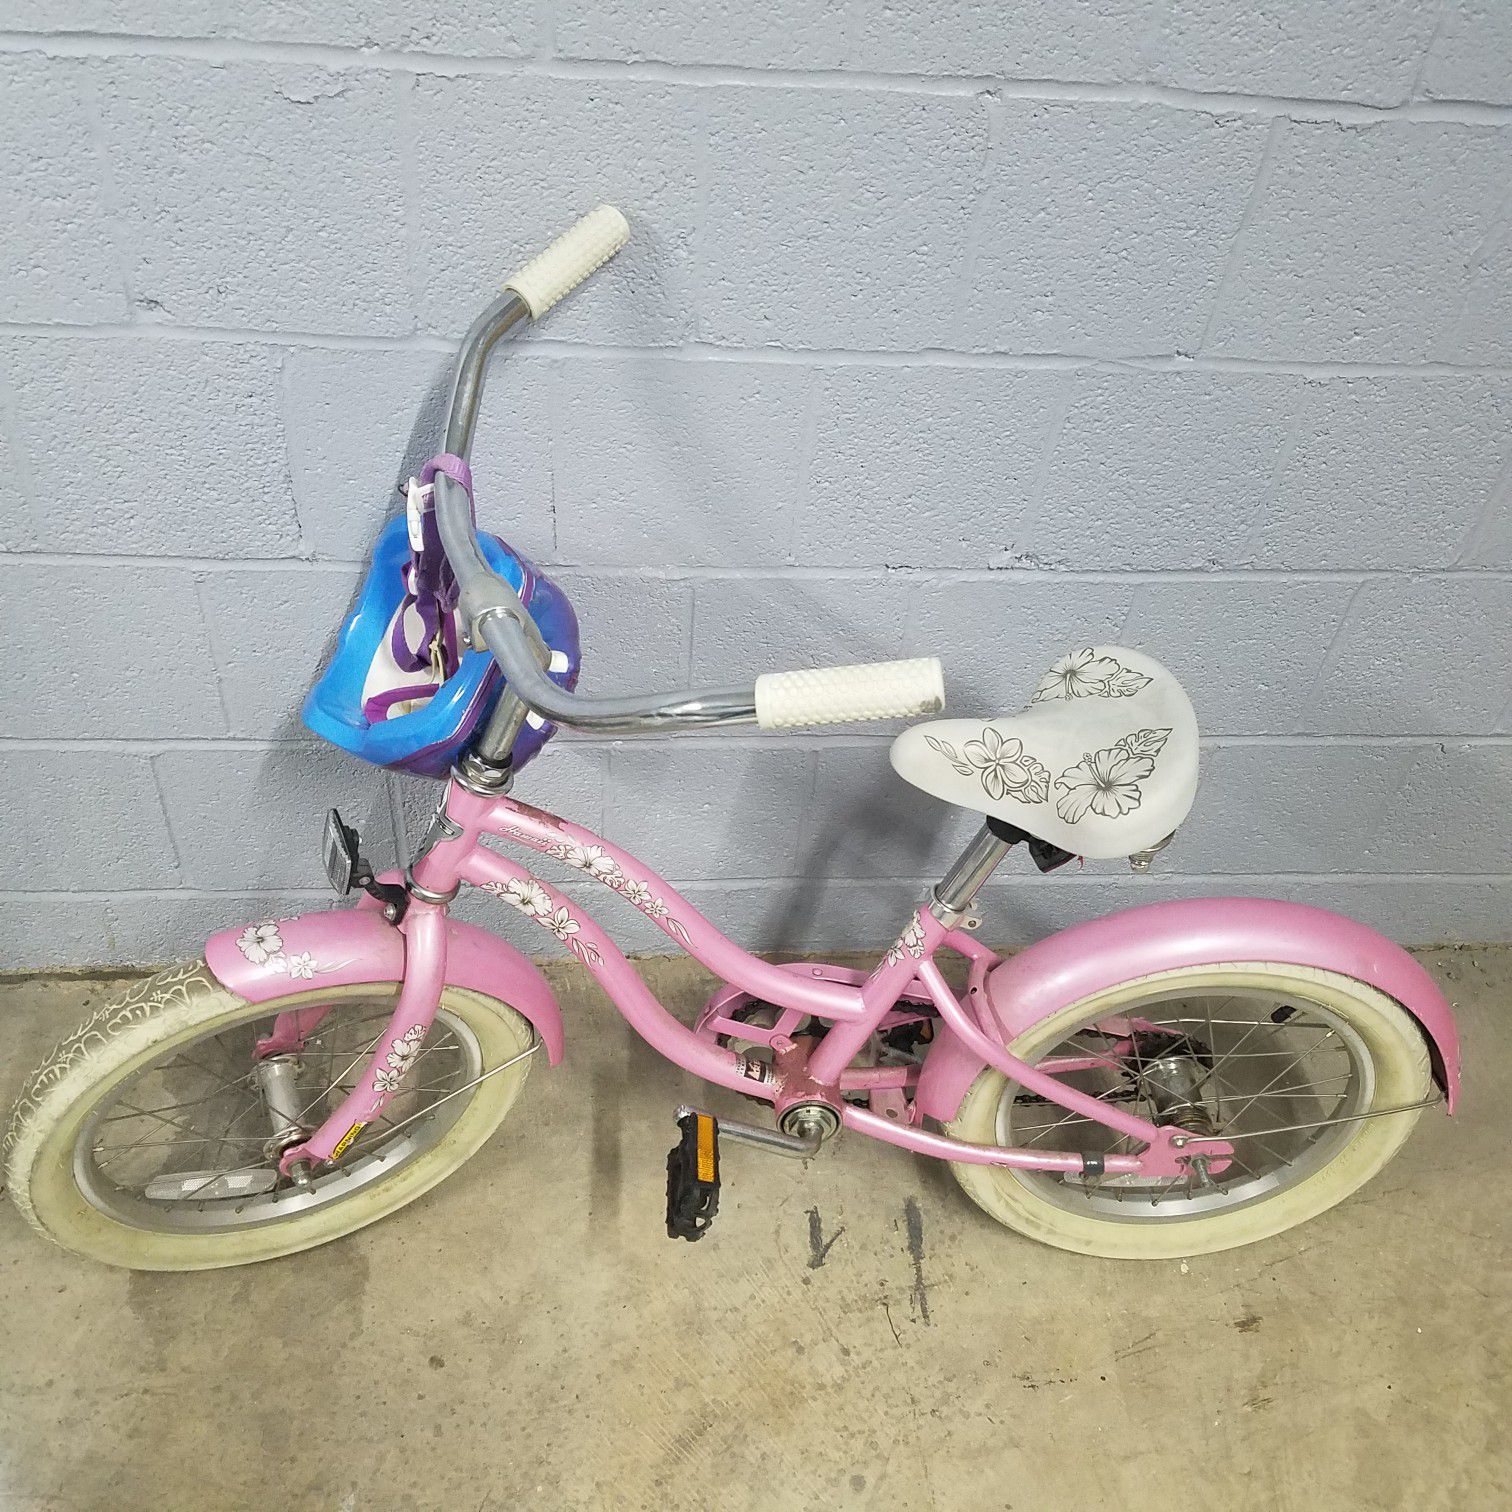 Girls 16" Electra Bike, Pink Hawaiian Style. Has heavy duty training wheels and helmet